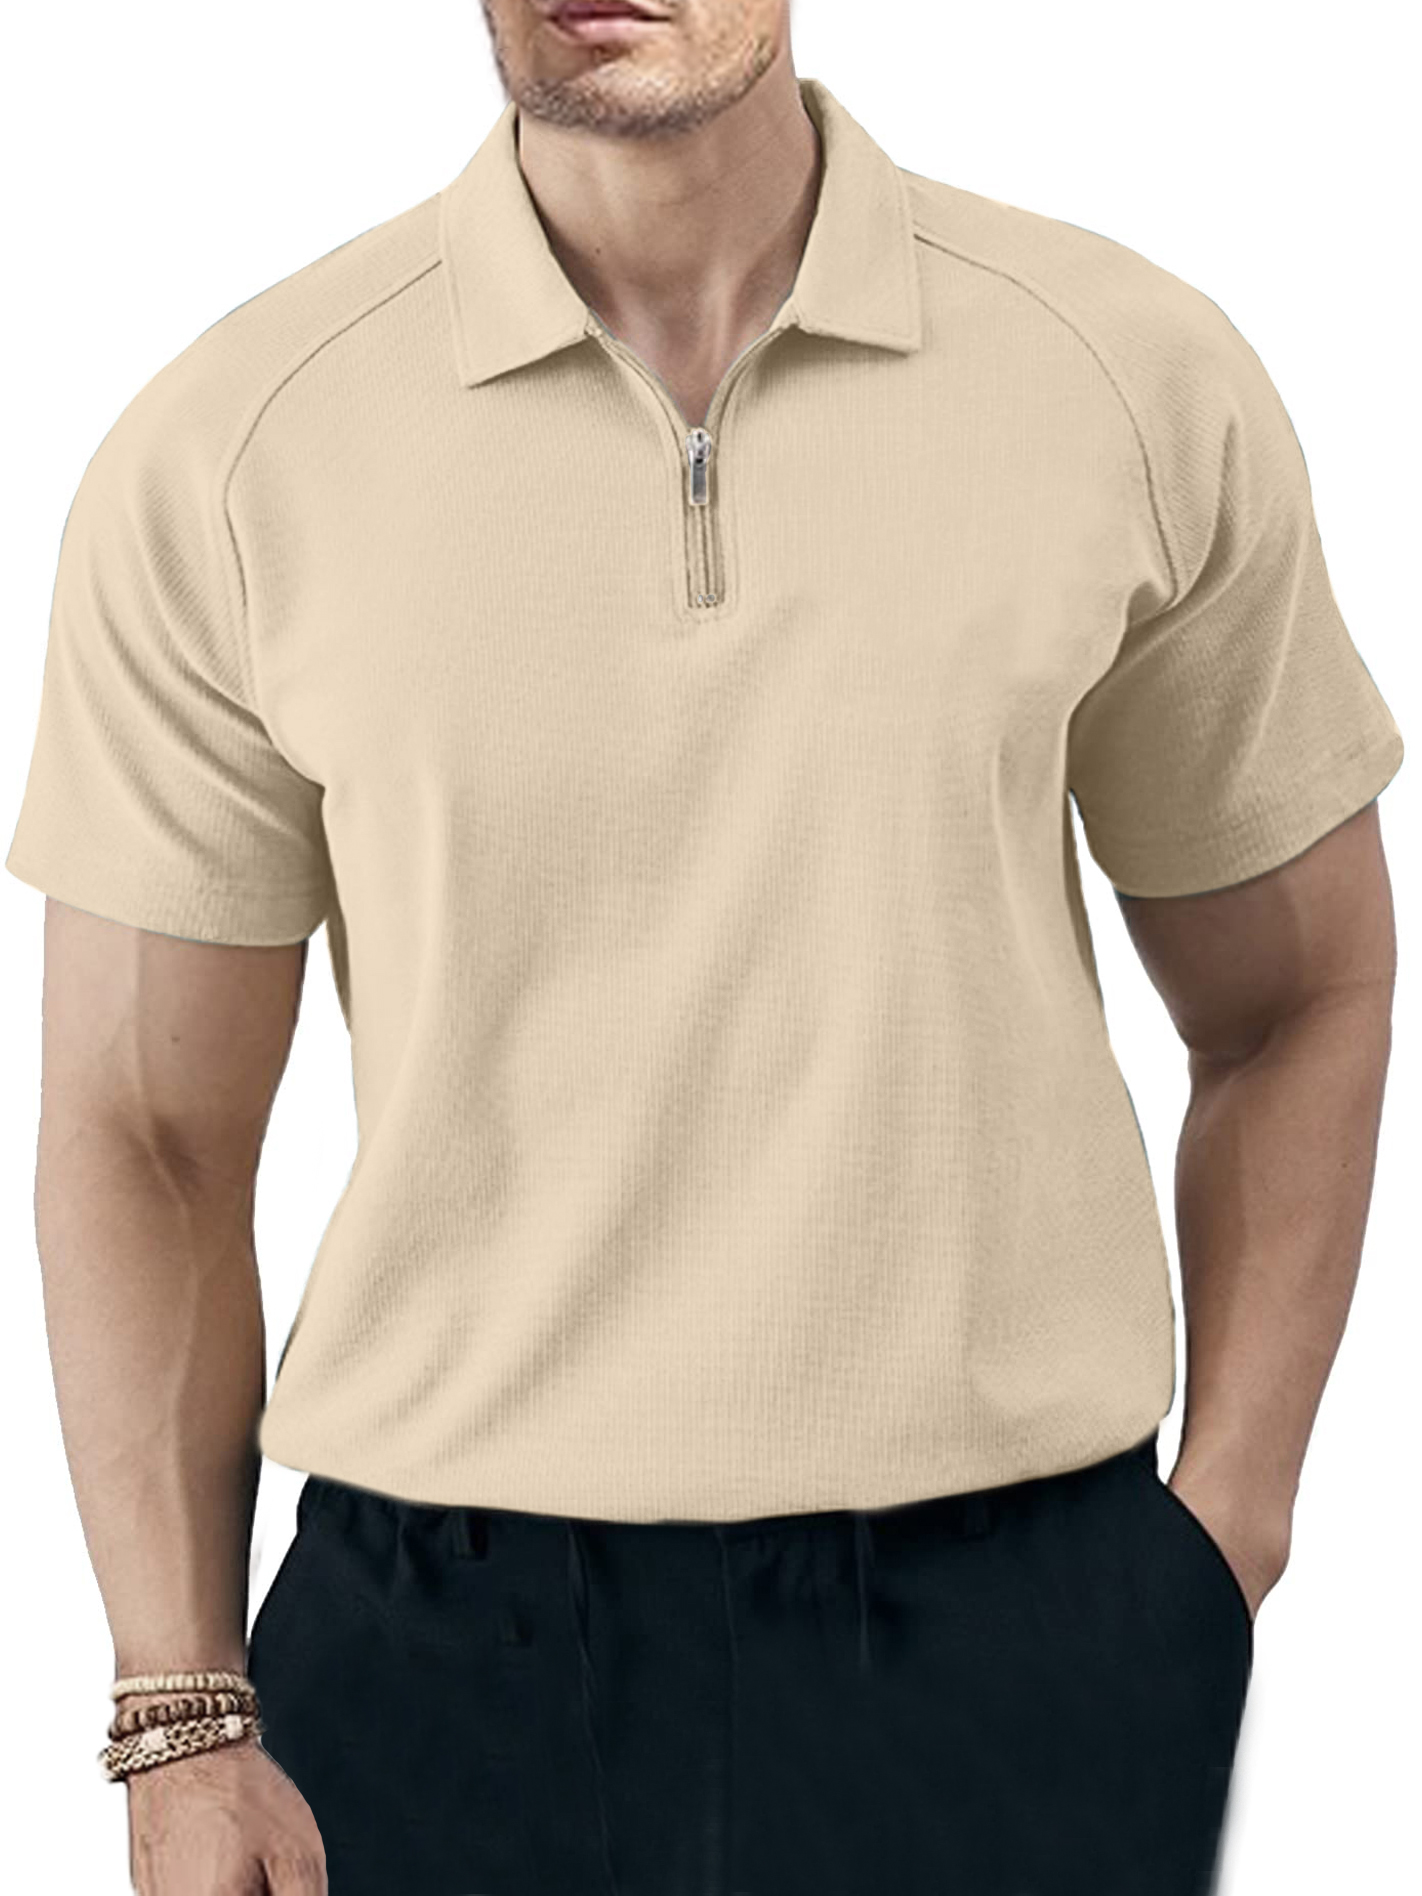 Men's Solid Color Casual Raglan Zipper Short Sleeve Polo Shirt